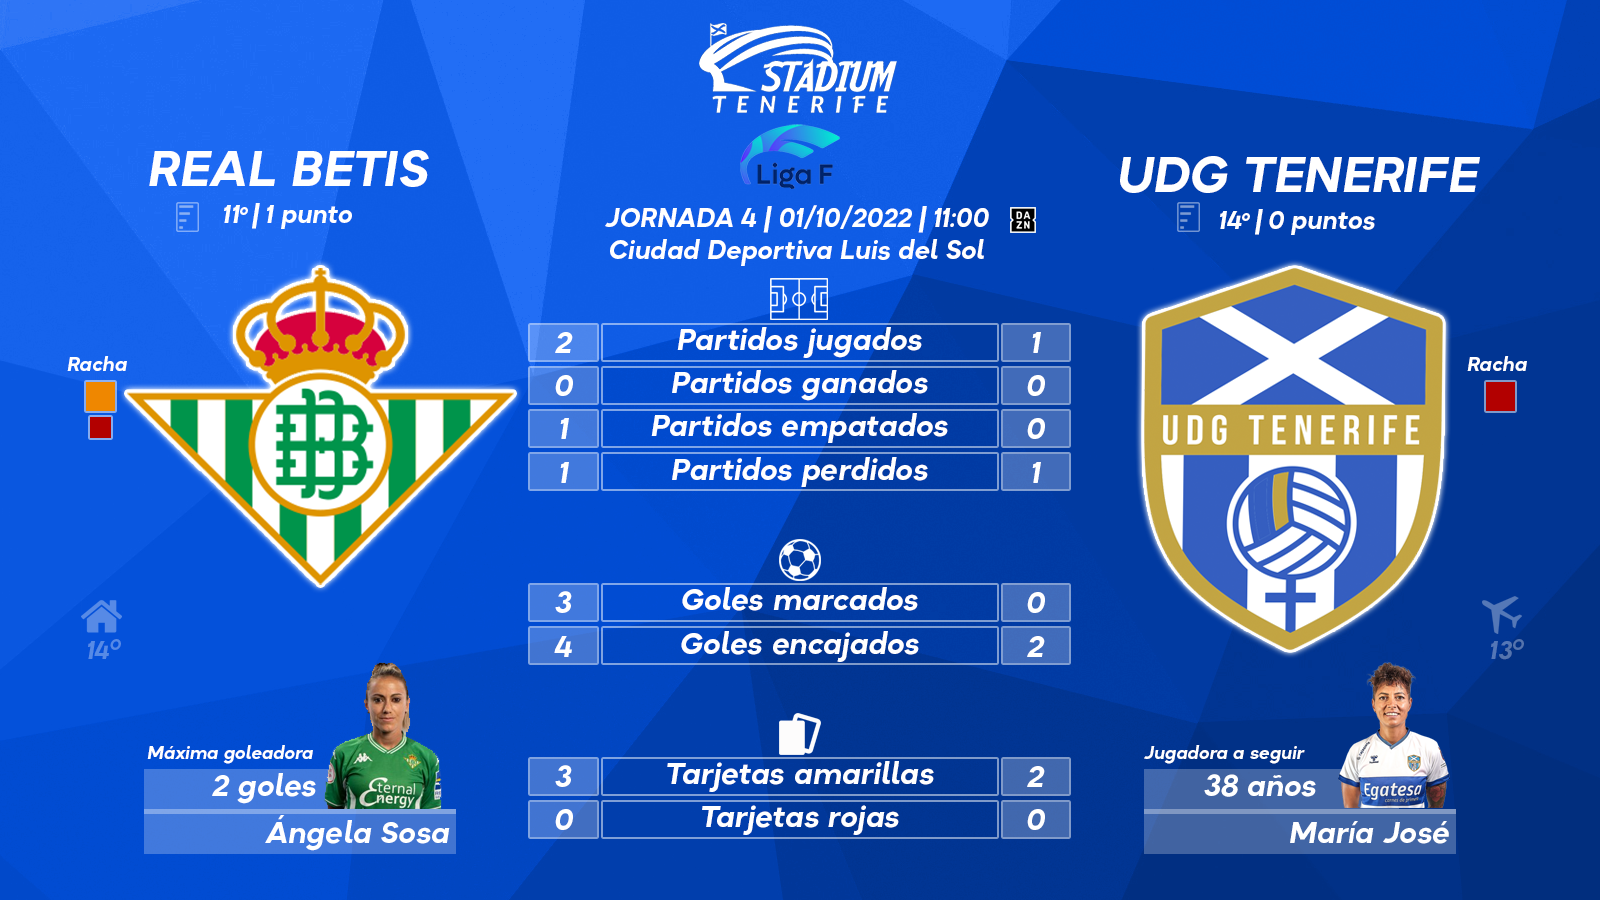 Previa del Real Betis - UDG Tenerife (4ªJ.- Liga F)